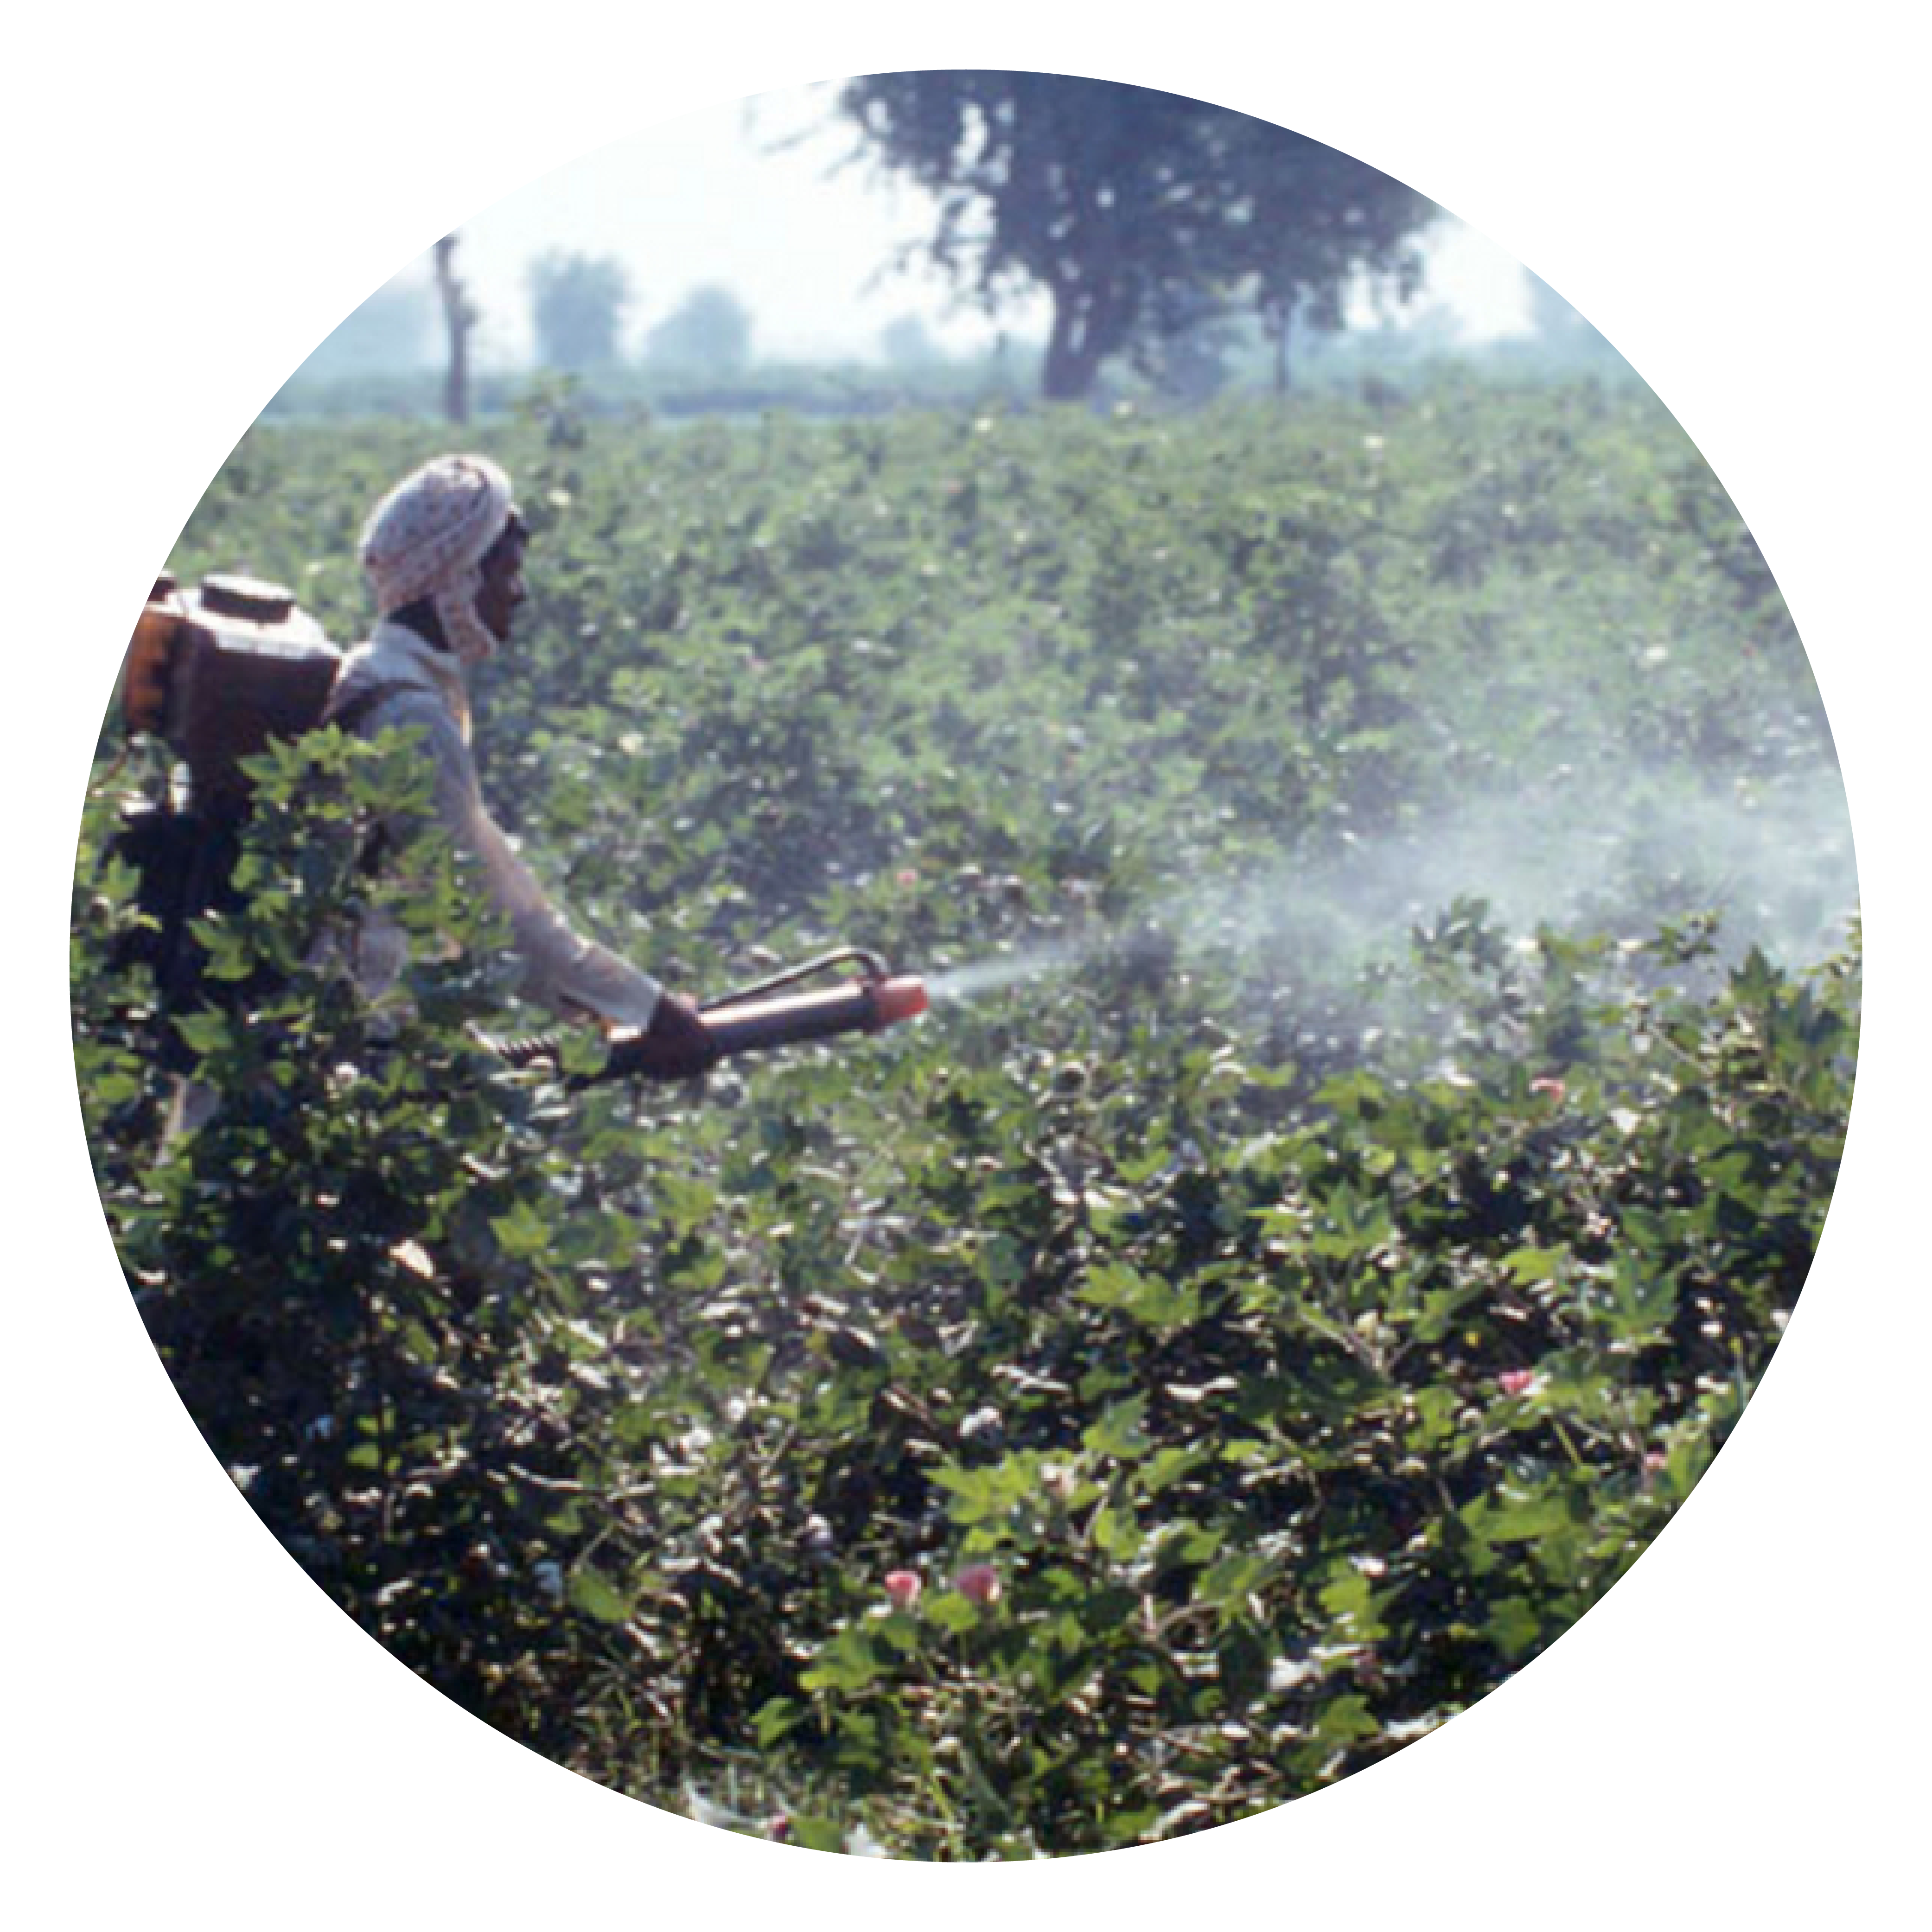 Pesticides spray on cotton